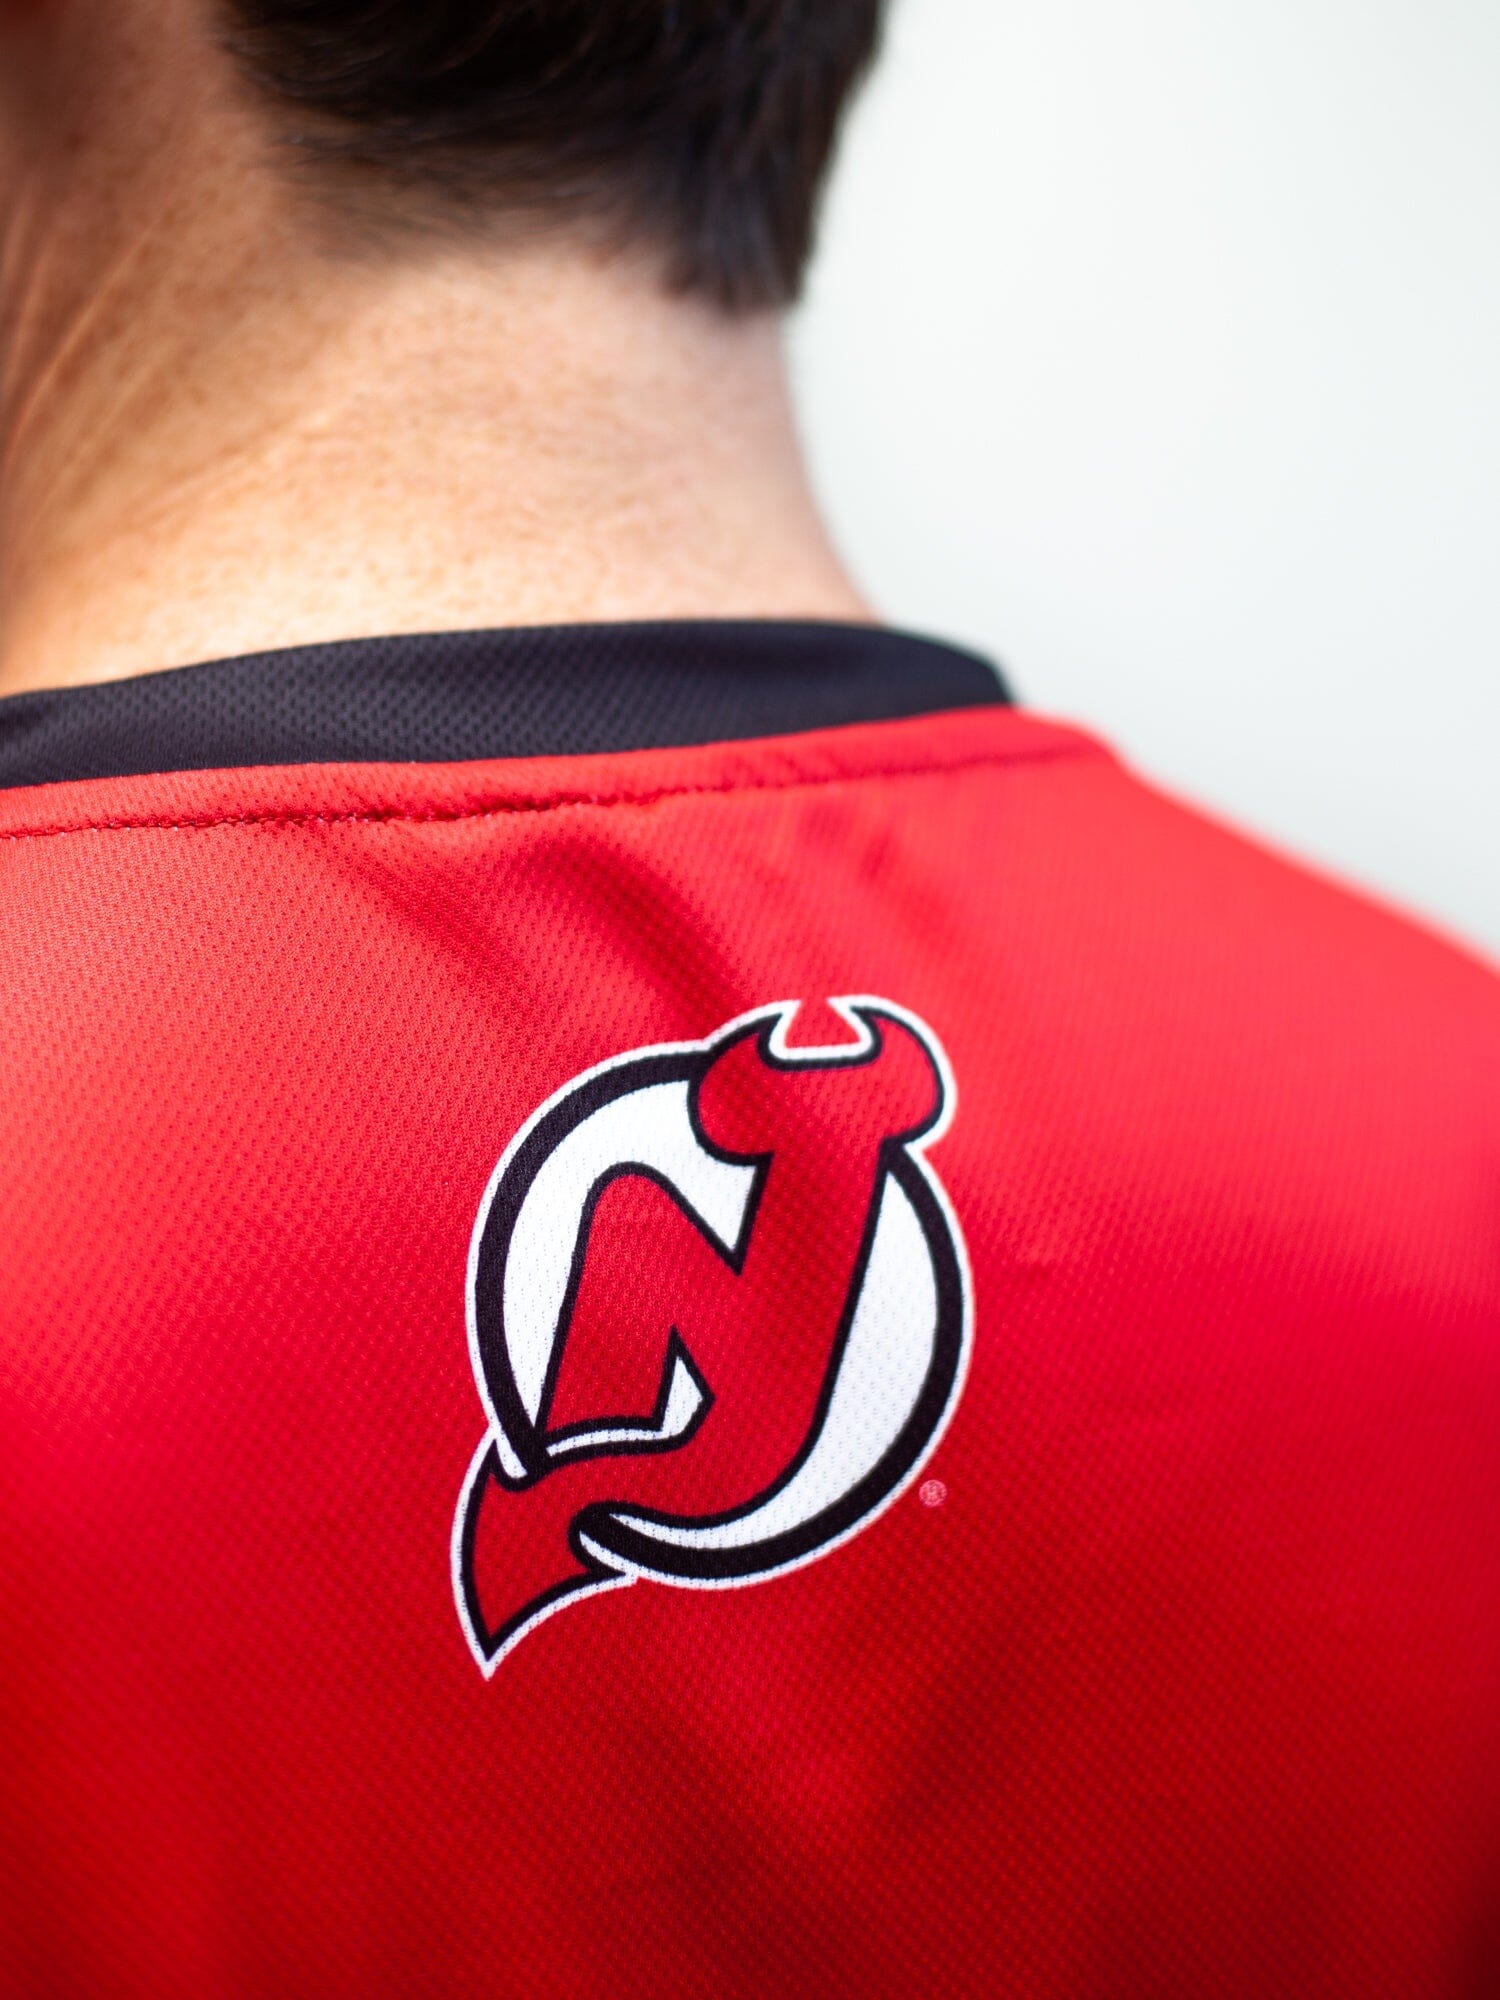 New Jersey Devils Sweatshirts in New Jersey Devils Team Shop